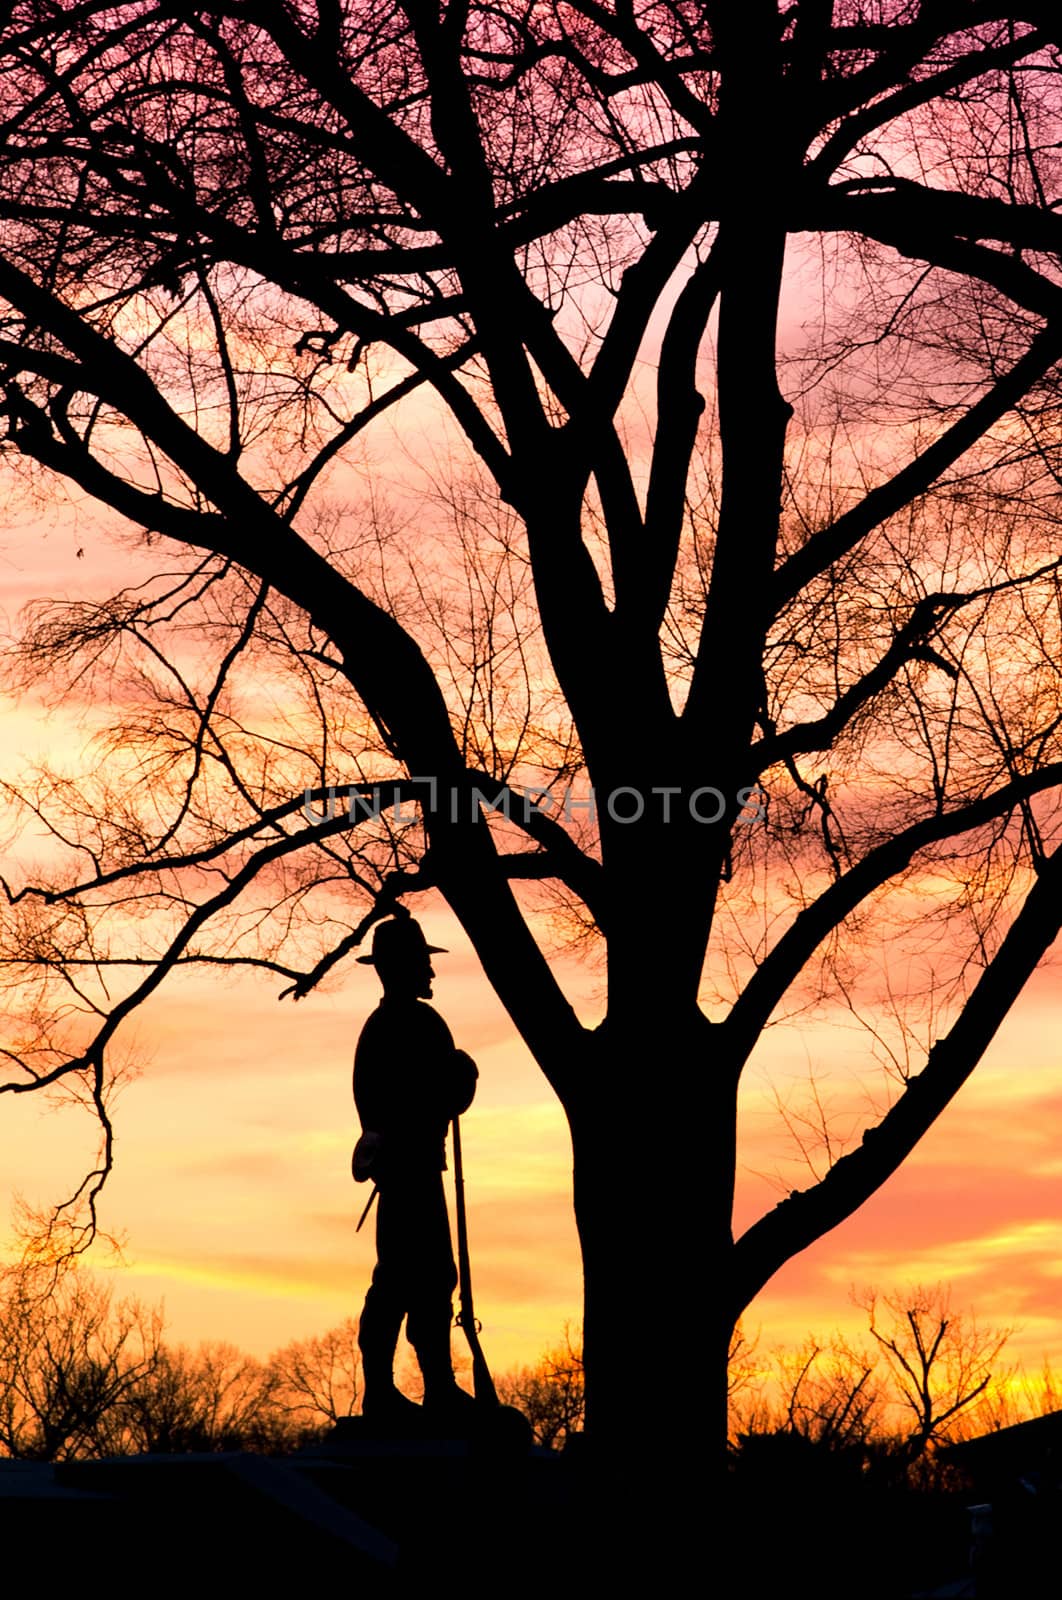 Silhouette of William Tecumseh Sherman statue and tree against a brilliant orange sunset.